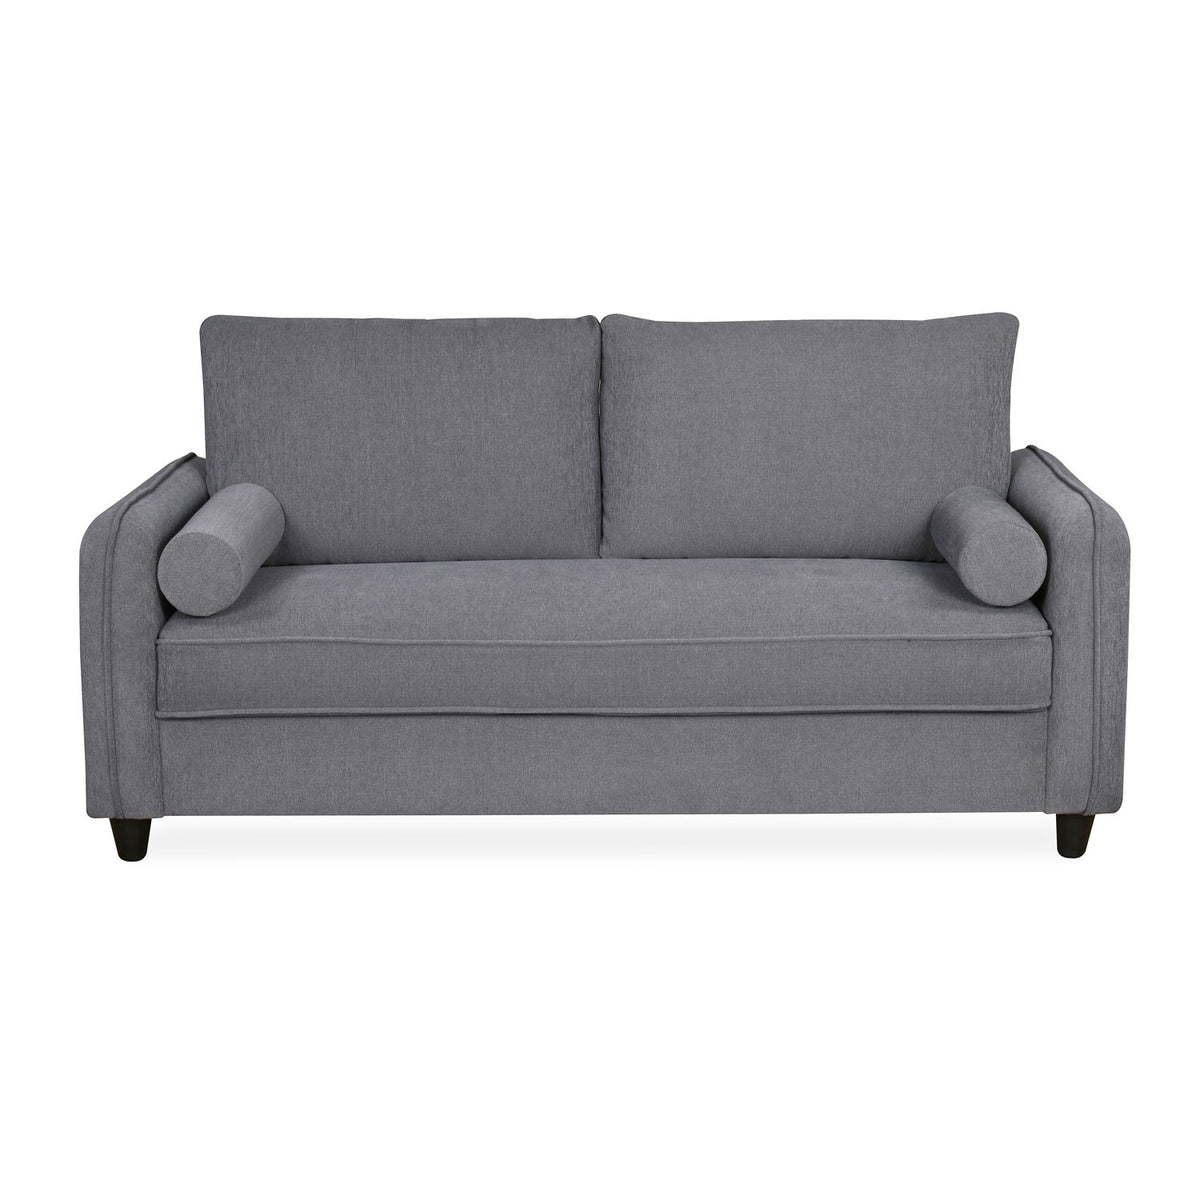 Buy Ryder 3 Seater Sofa (Light Grey) Online| At-home | Nilkamal At-home ...